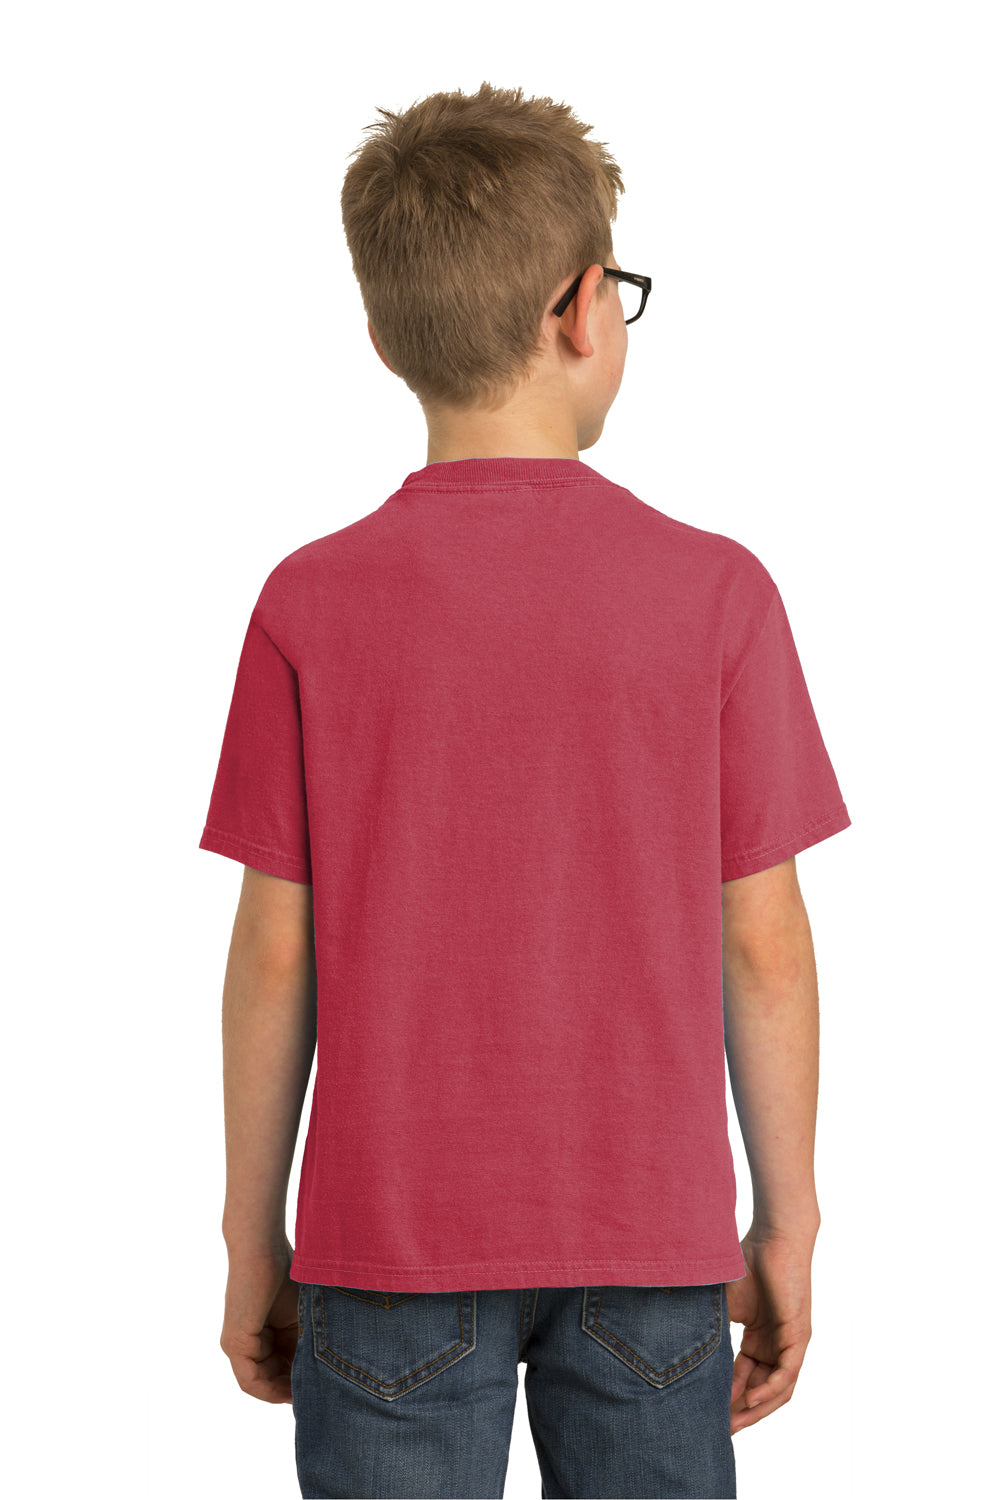 Port & Company PC099Y Youth Beach Wash Short Sleeve Crewneck T-Shirt Merlot Red Back